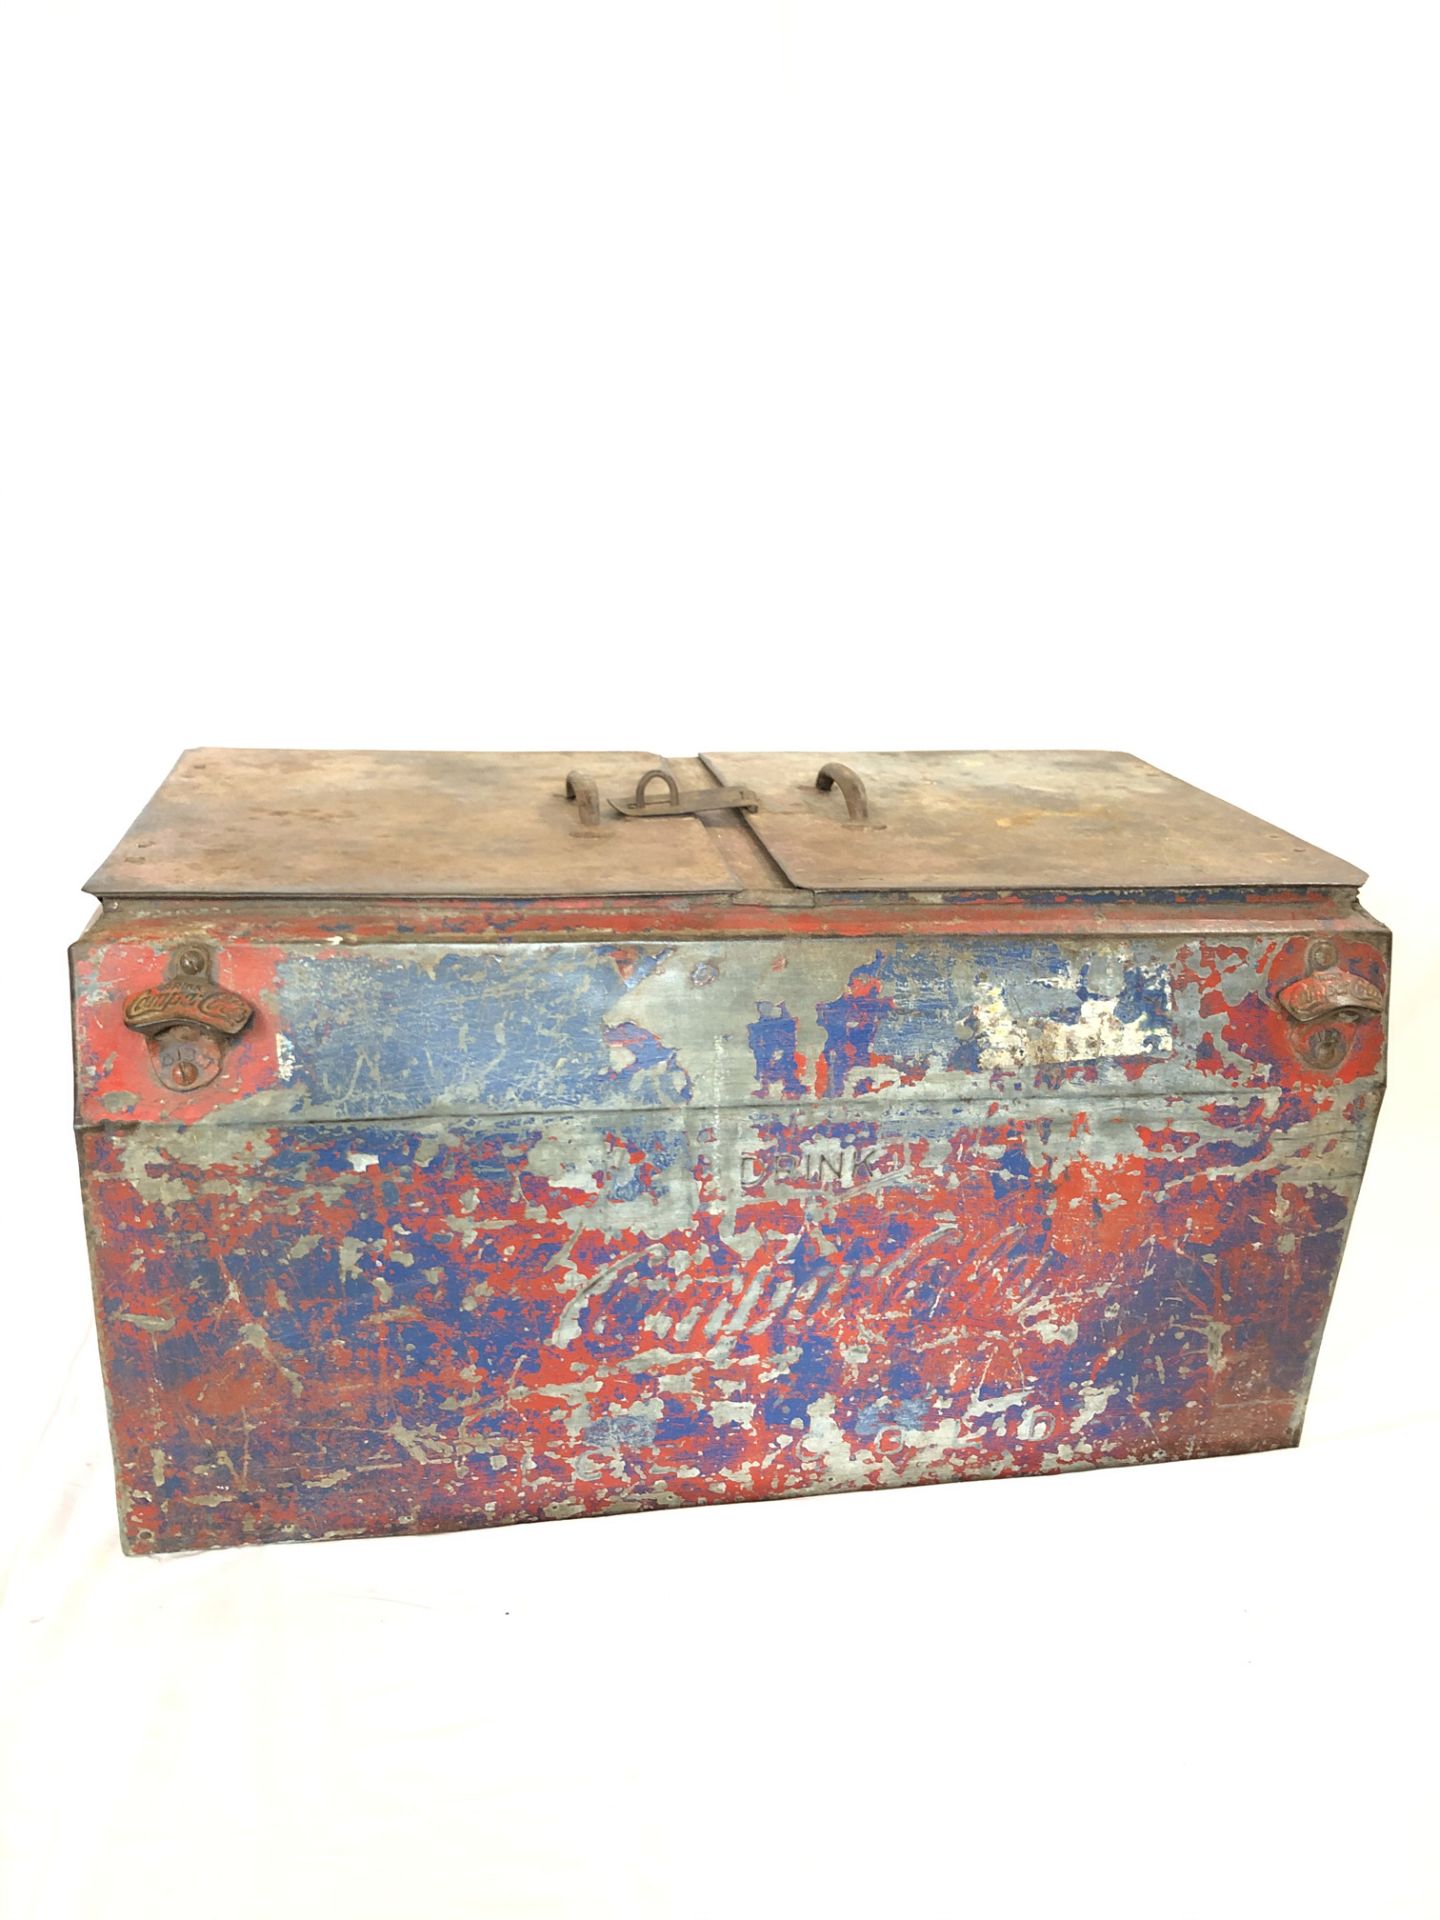 Vintage Campa Cola cooler box - Image 2 of 7